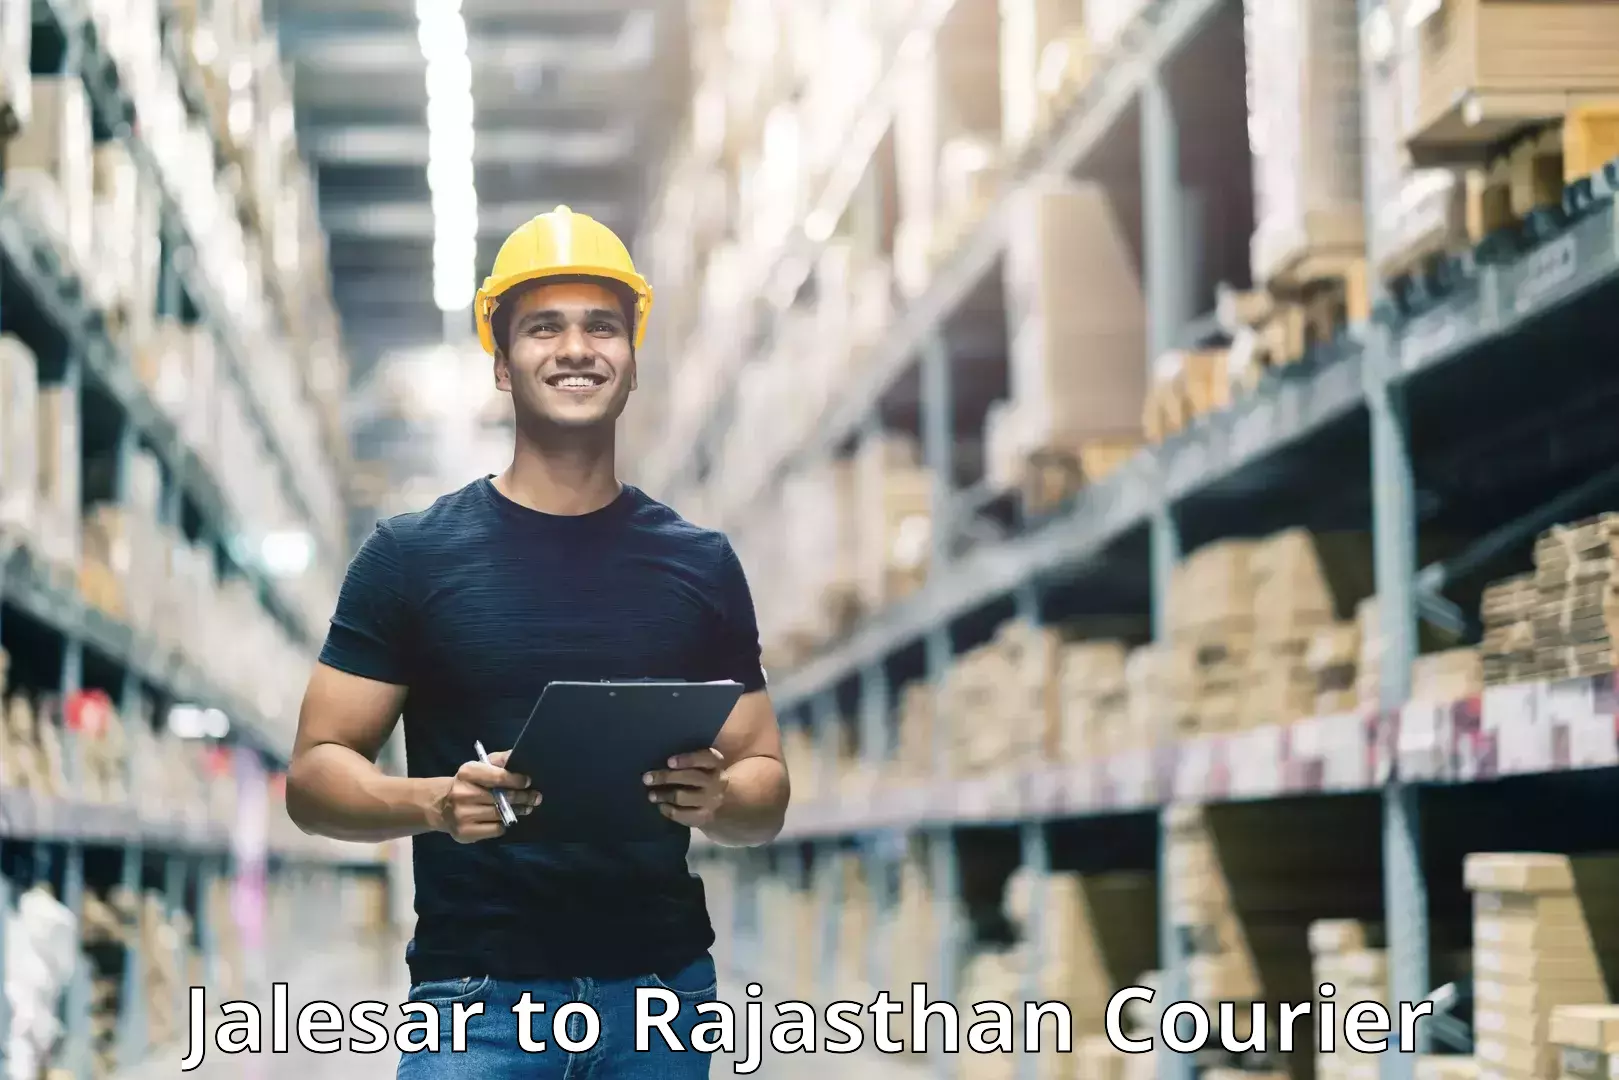 Courier service comparison Jalesar to Viratnagar